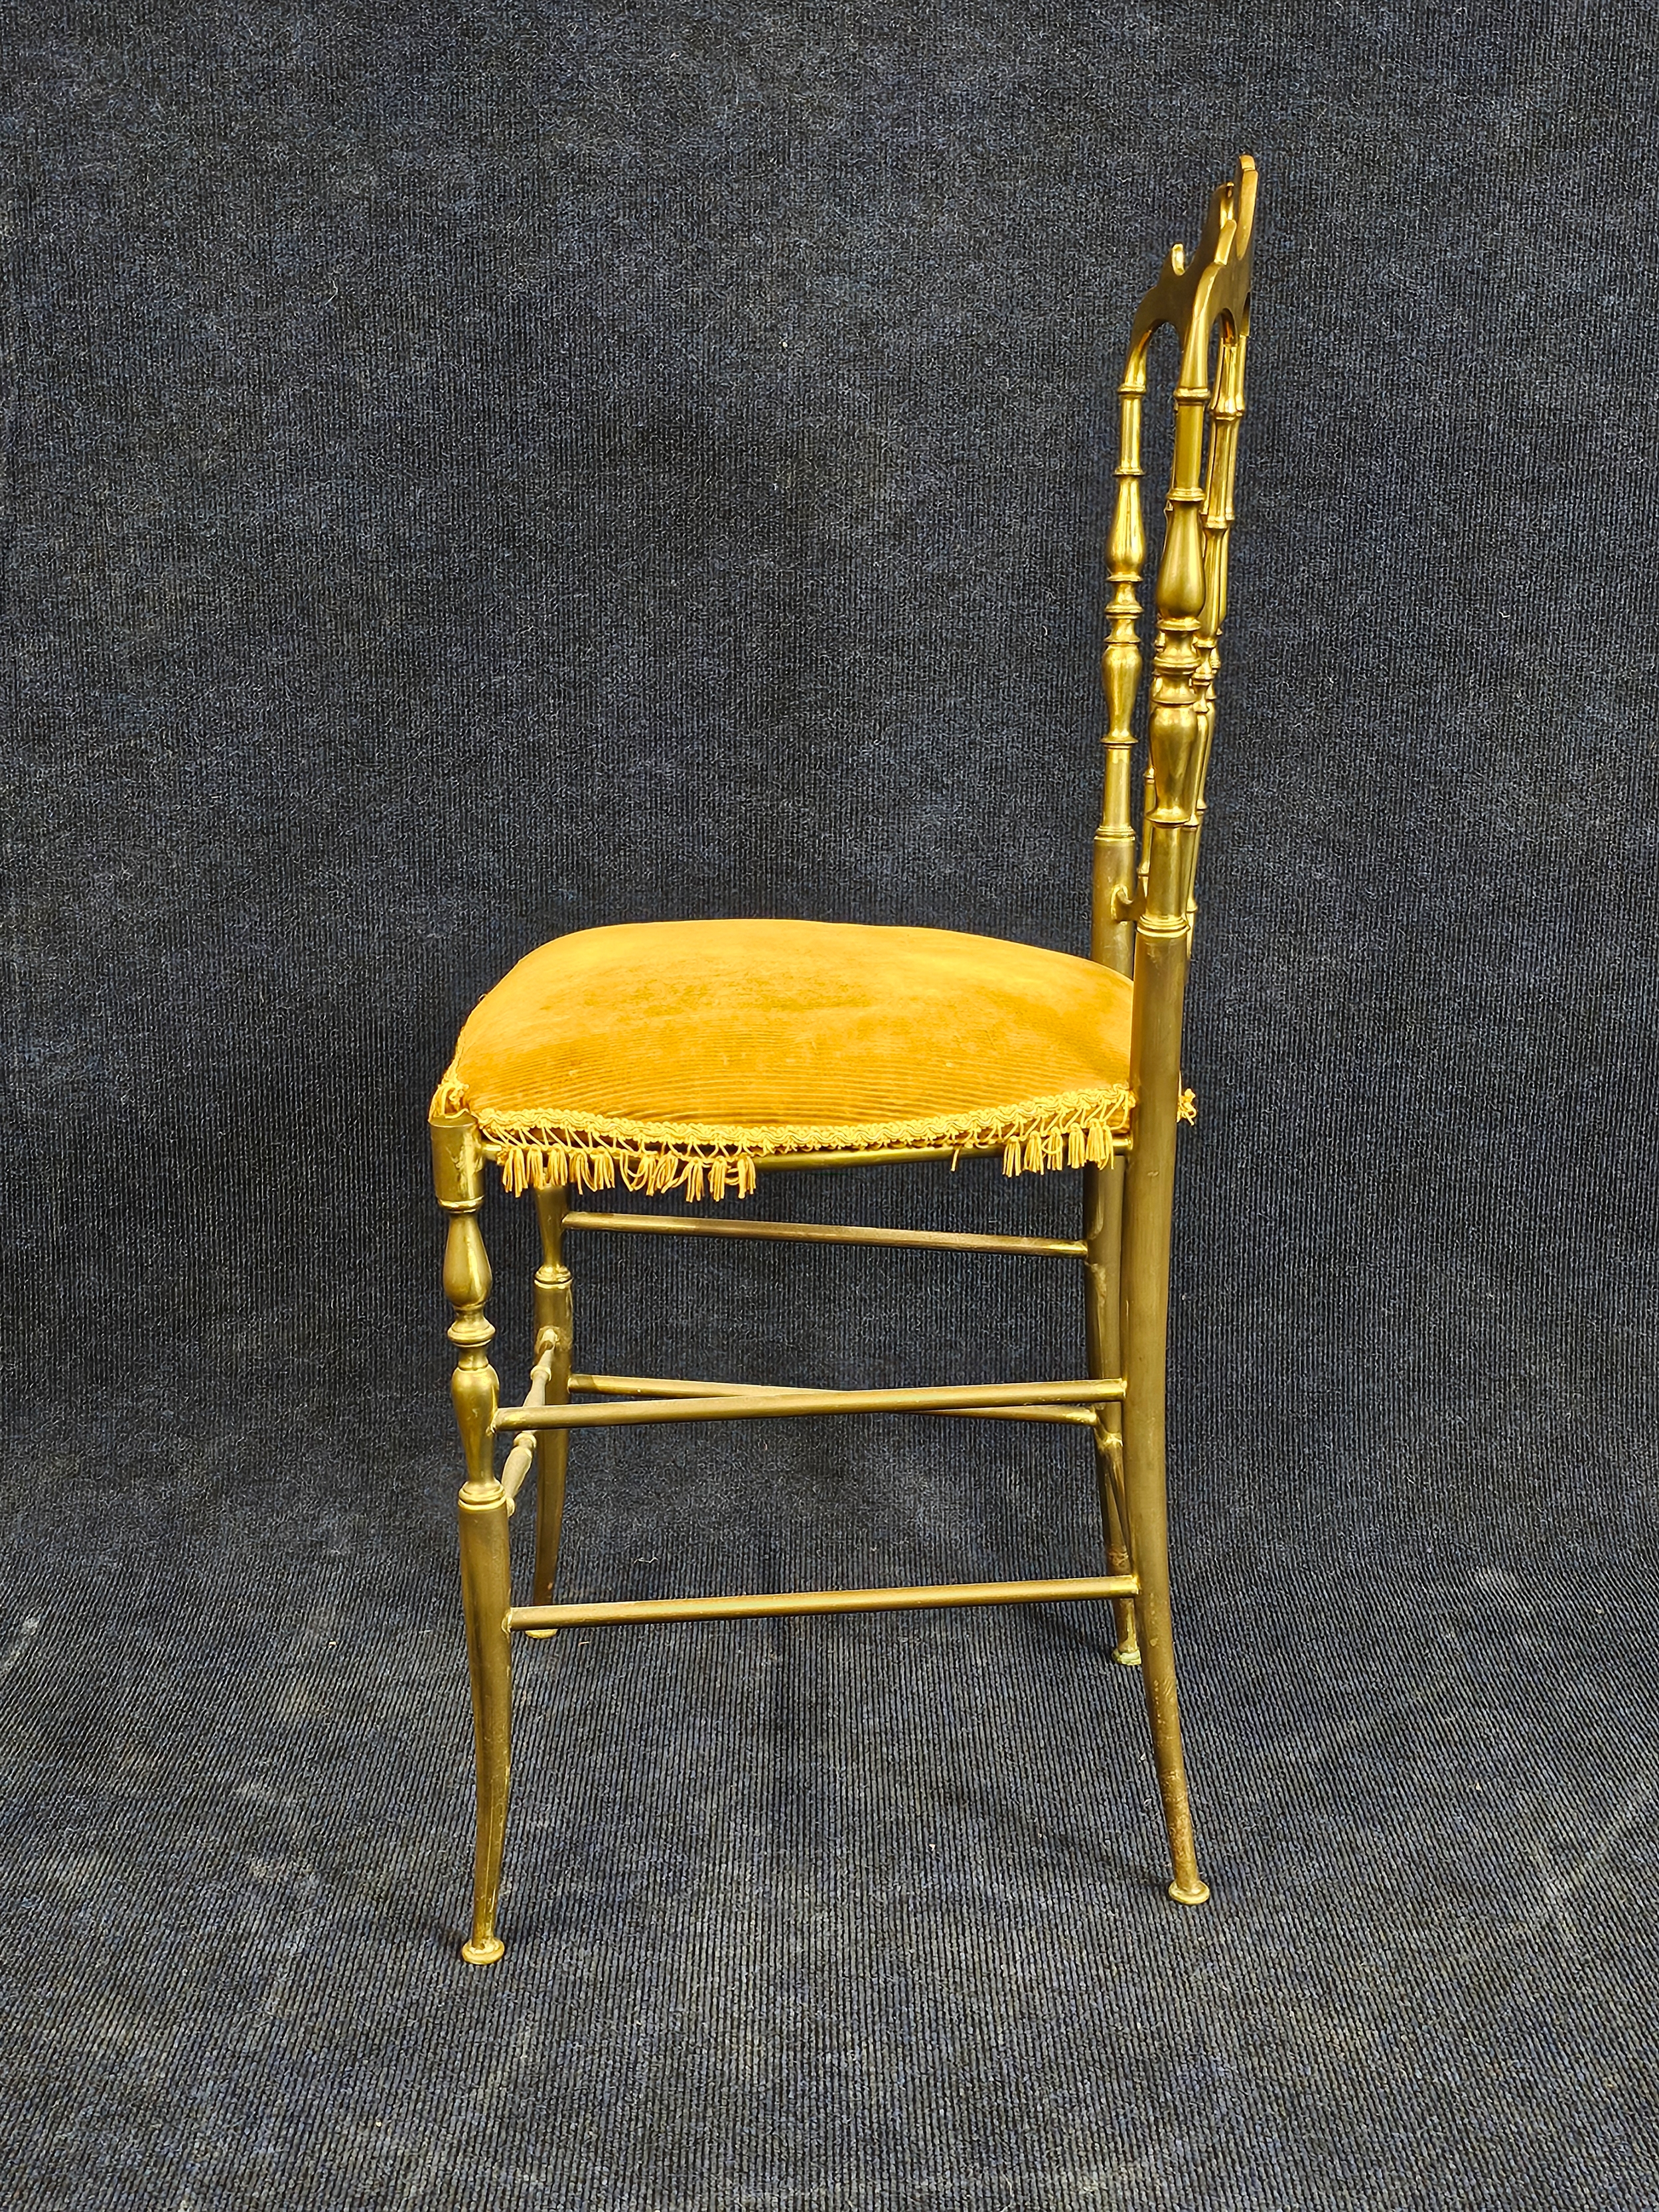 A brass salon chair - Image 8 of 8